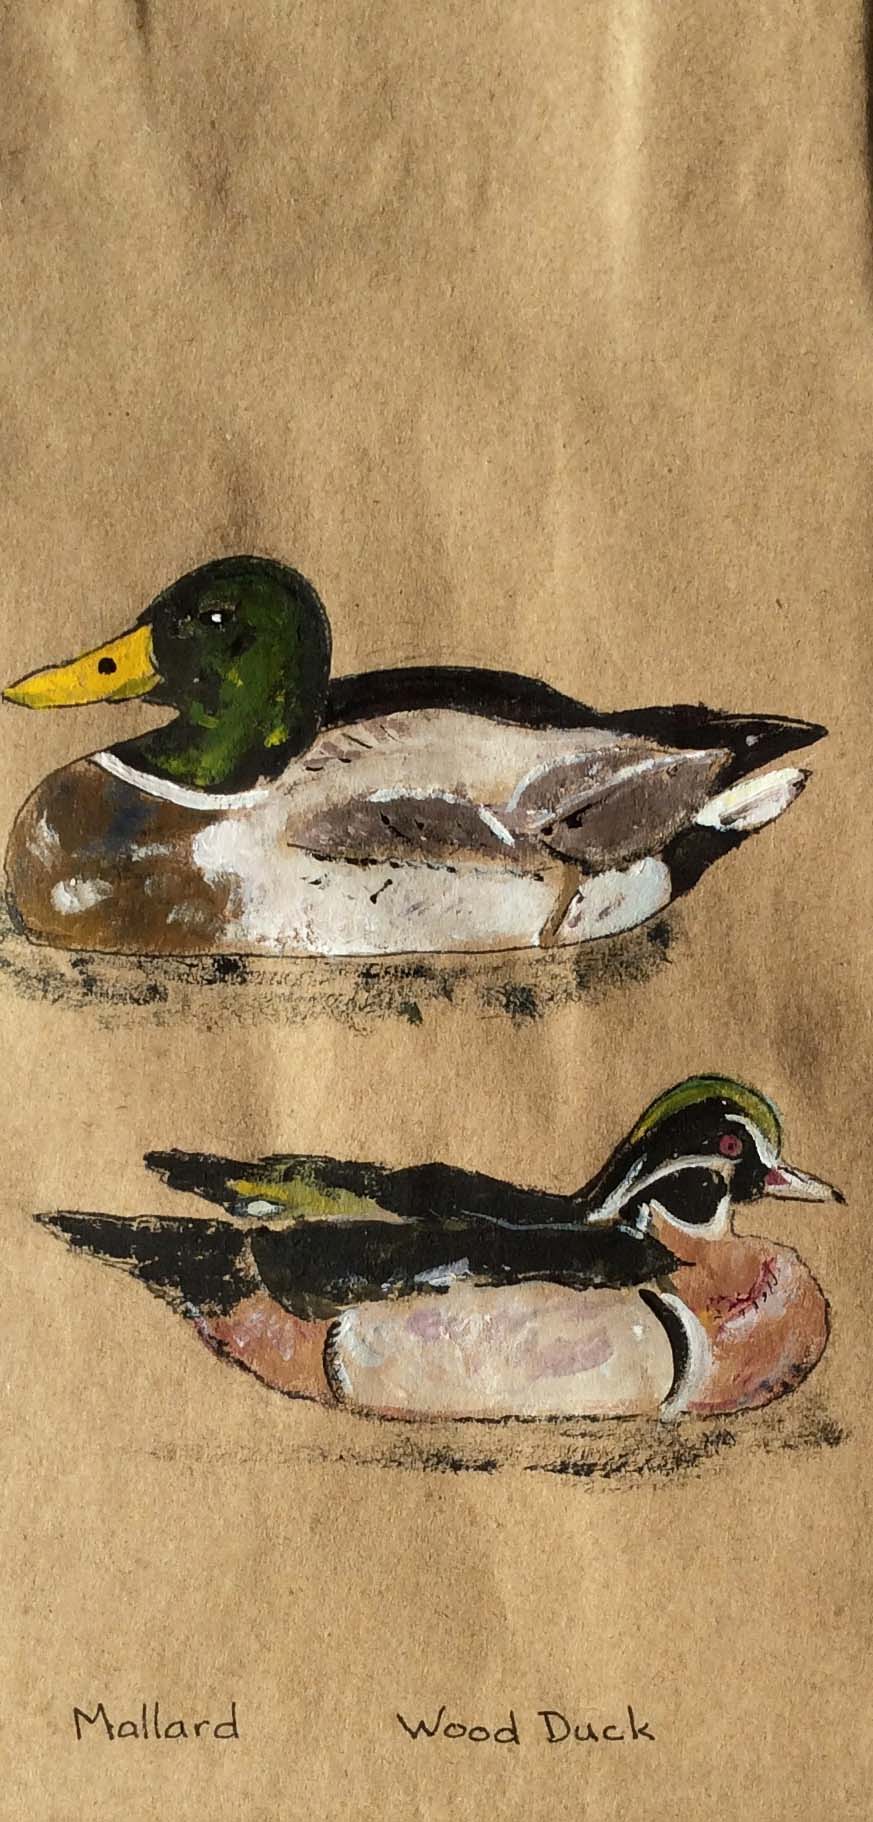 Mallard and Wood Duck